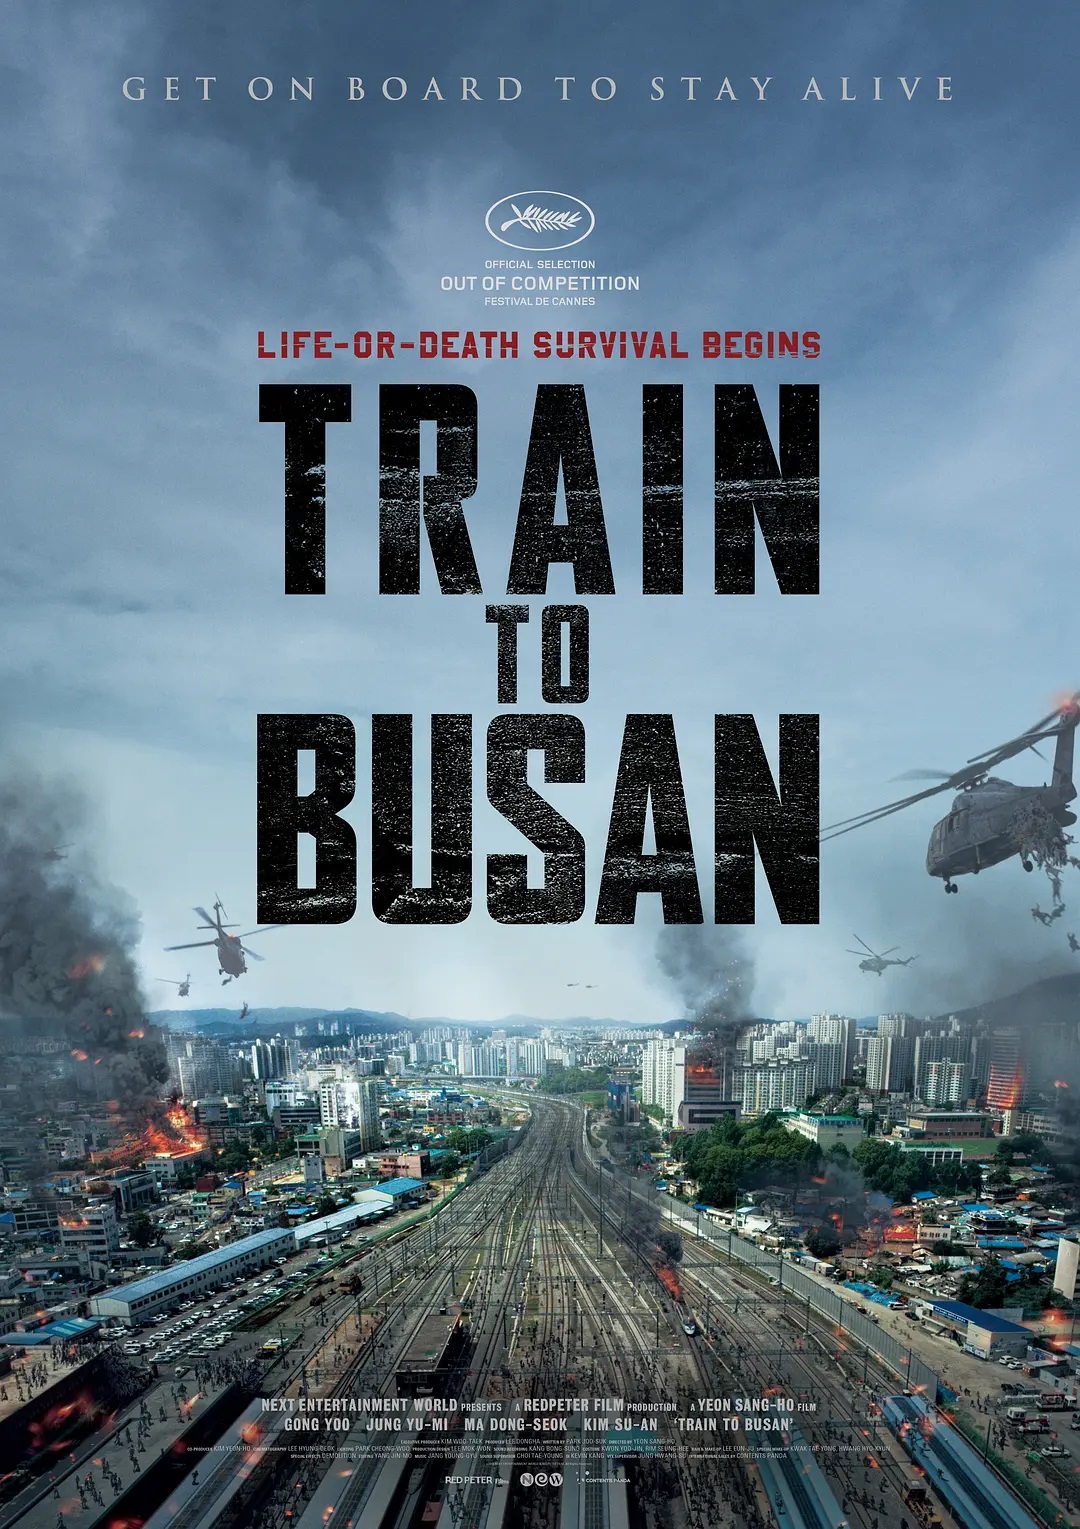  free-movies-on-youtube-Train-to-Busan  